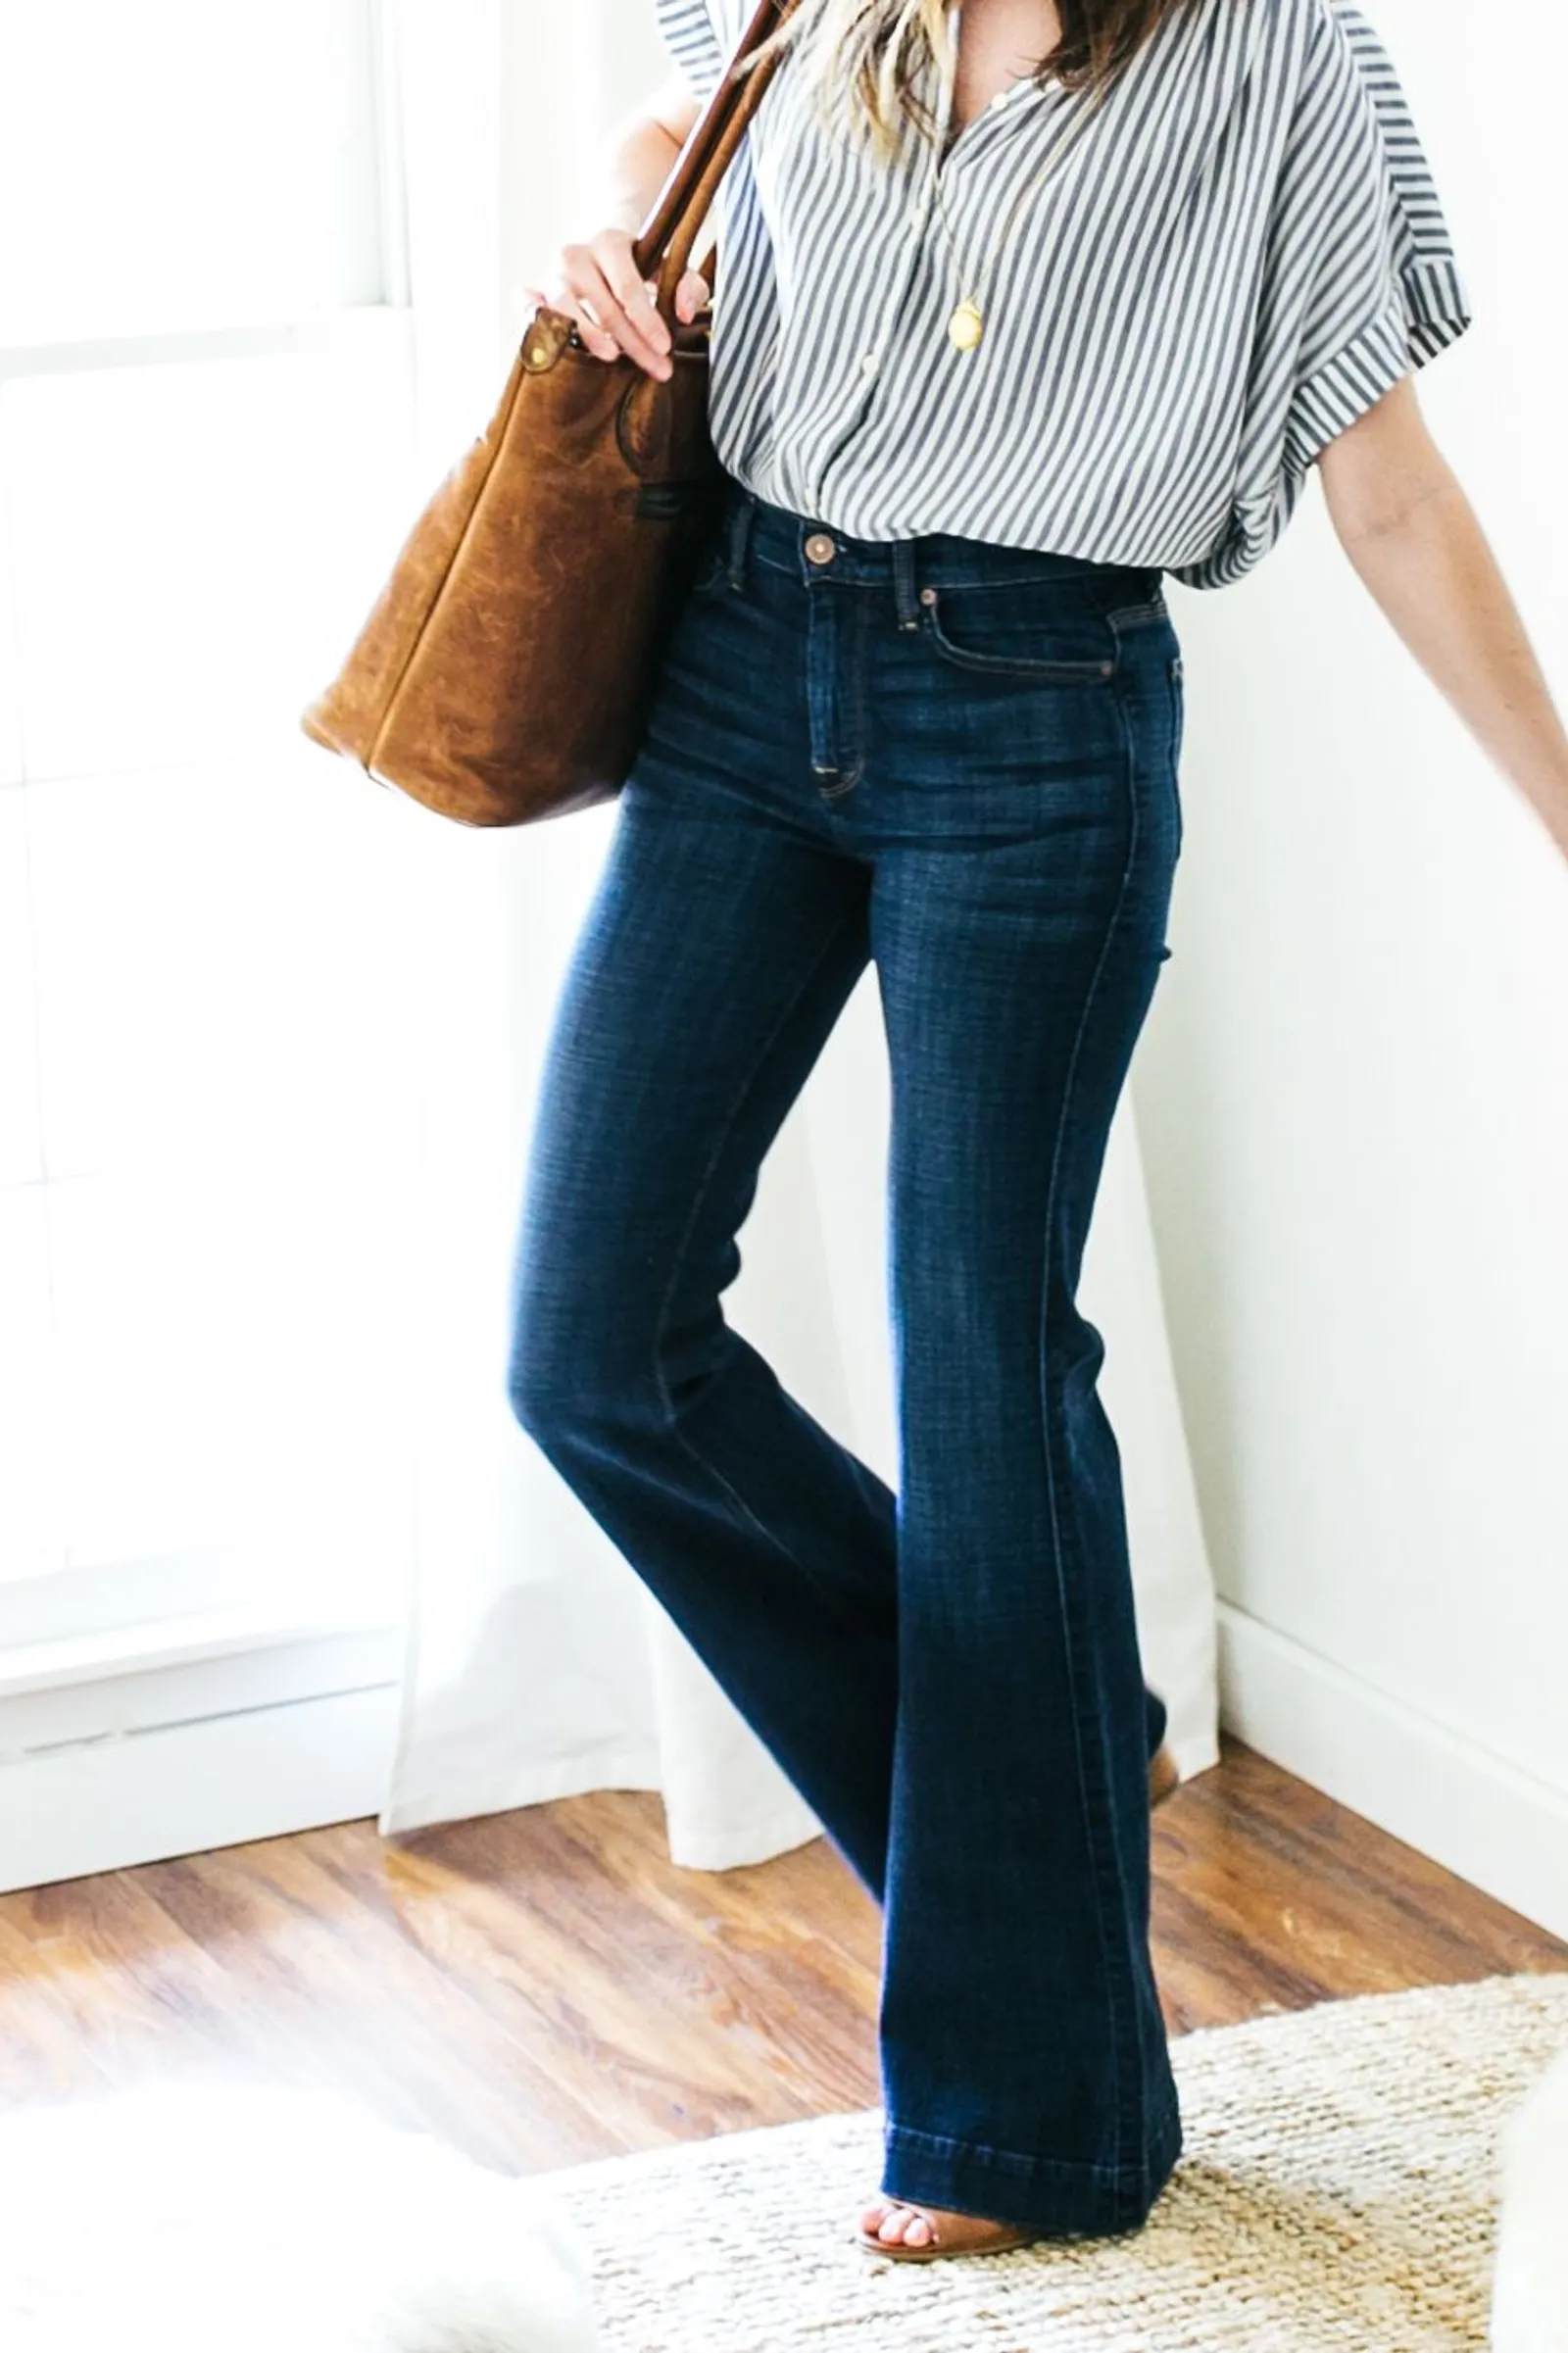 Tipe Celana Jeans Wanita yang Wajib Kamu Coba